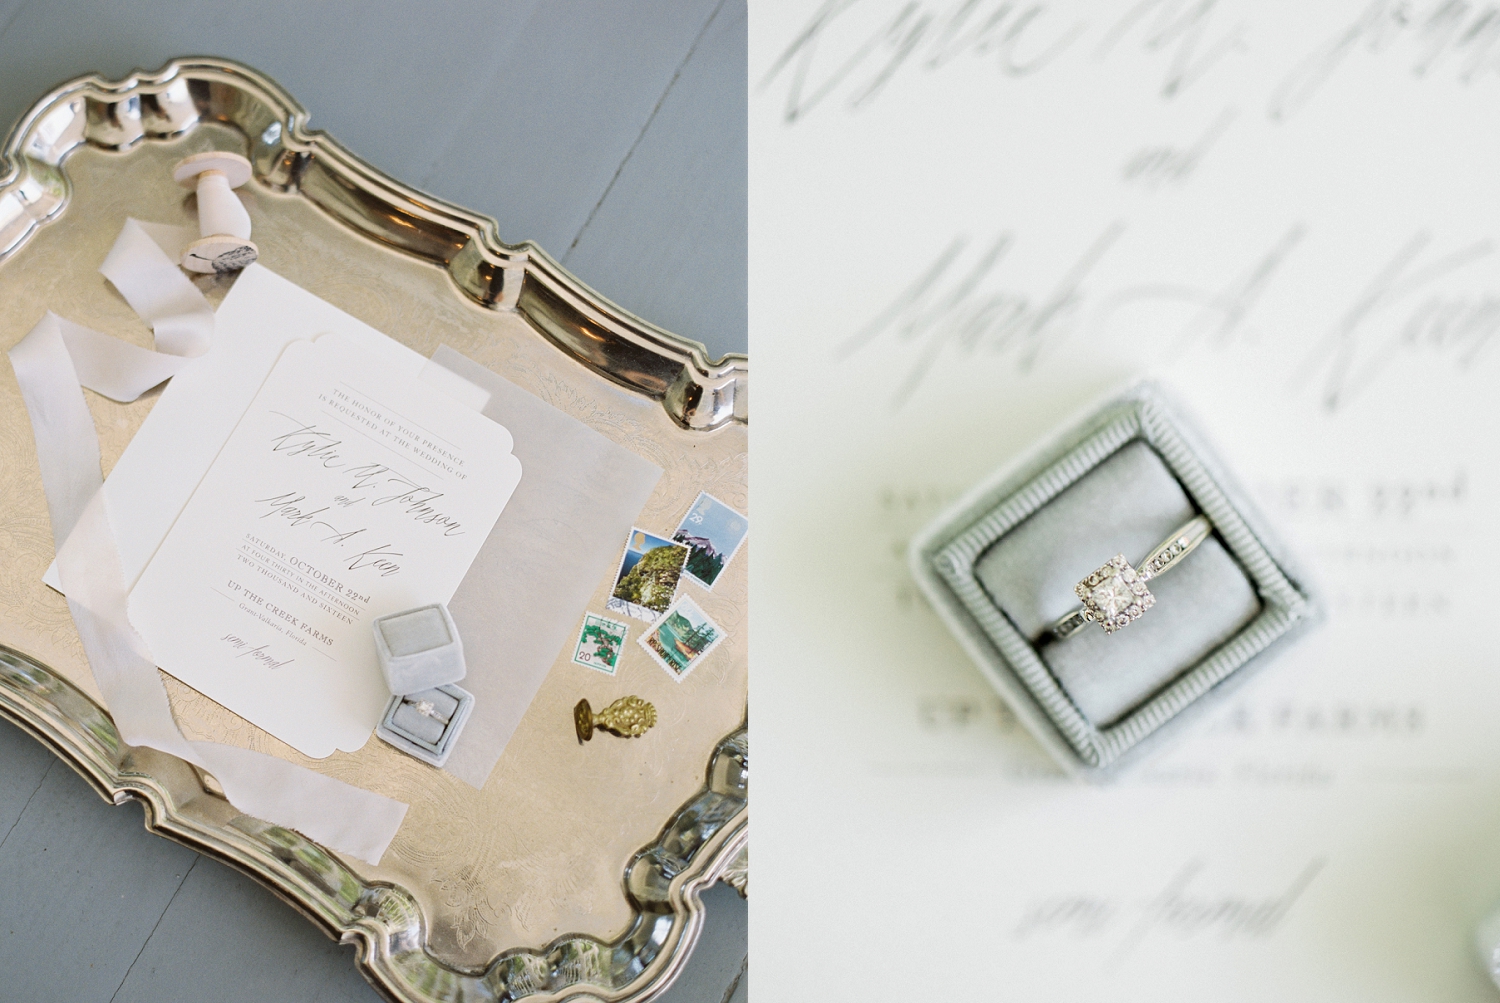  wedding invitation ideas, white wedding invitations, white wedding palette ideas, ring box, engagement ring ideas